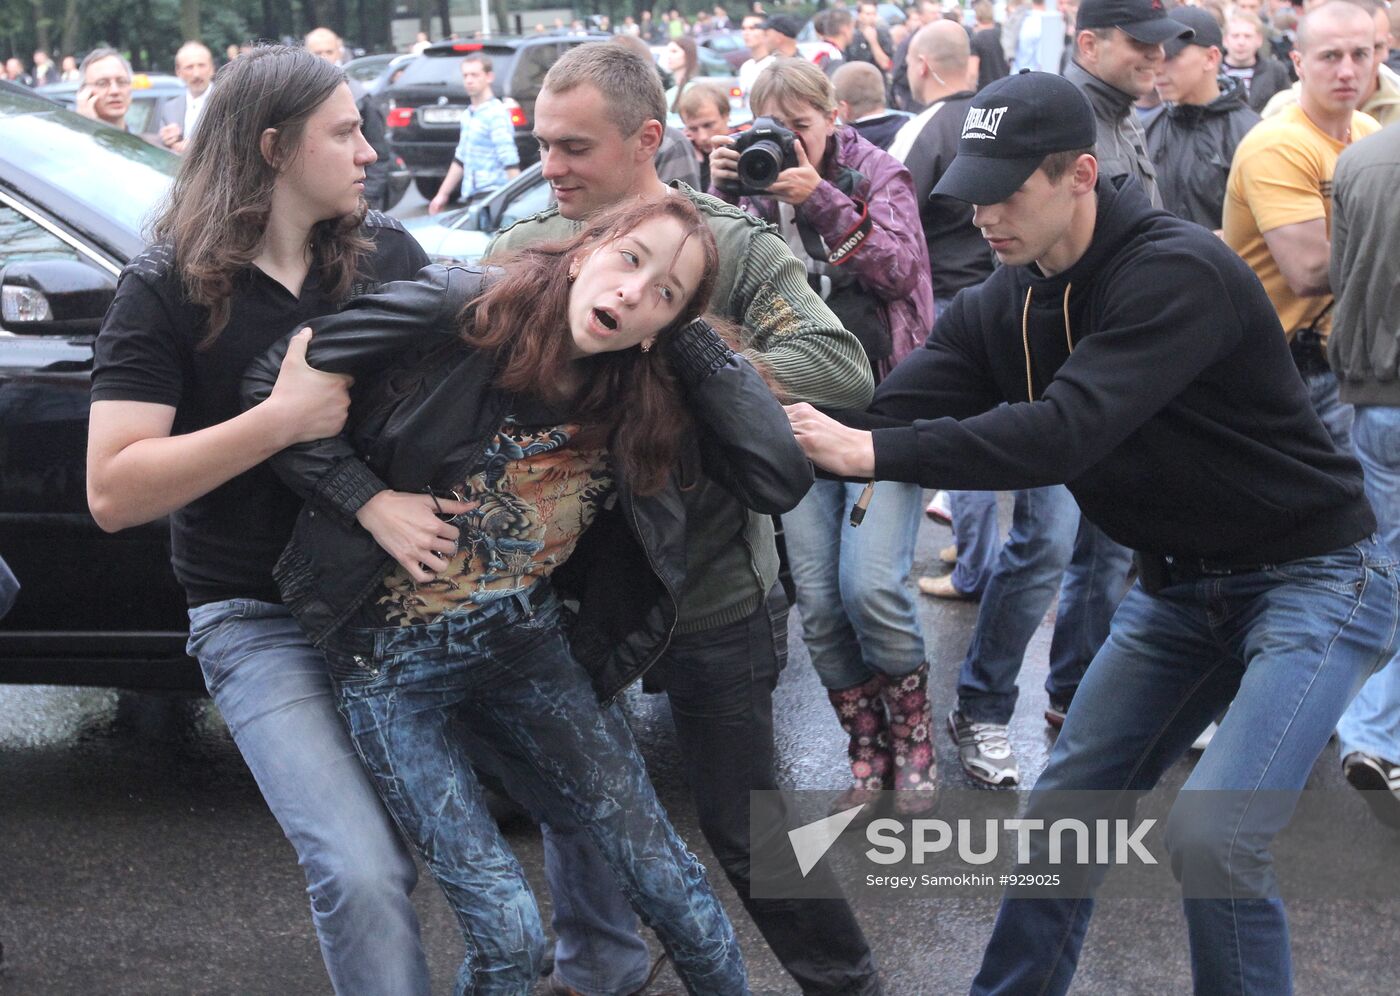 Revolution Through Social Networks movement rallies in Minsk